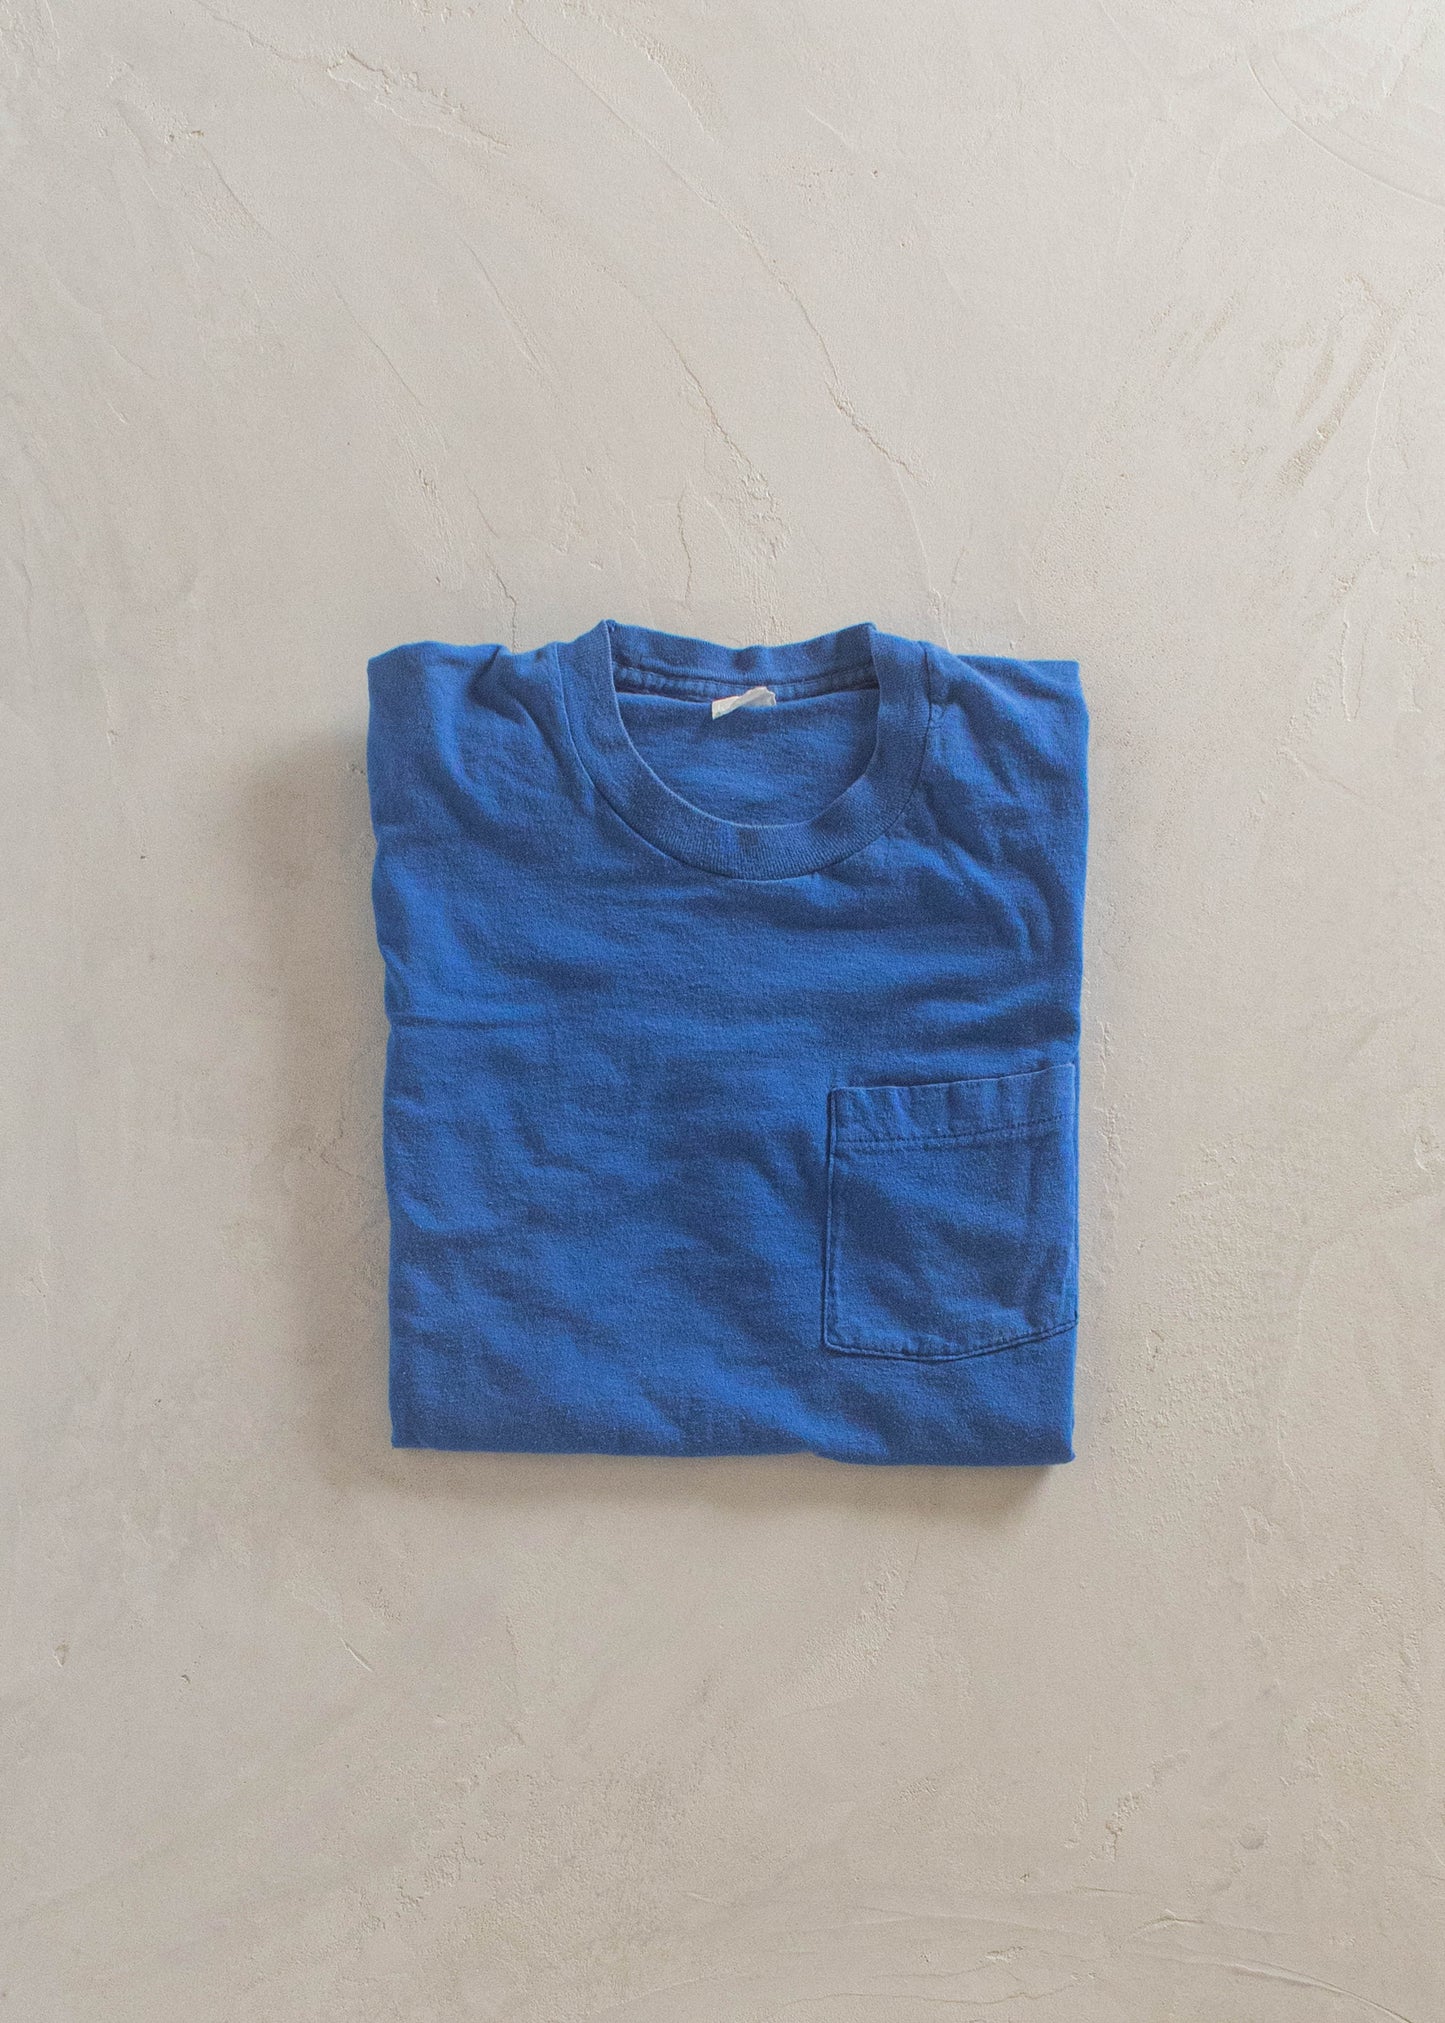 1980s Selvedge Pocket T-Shirt Size S/M